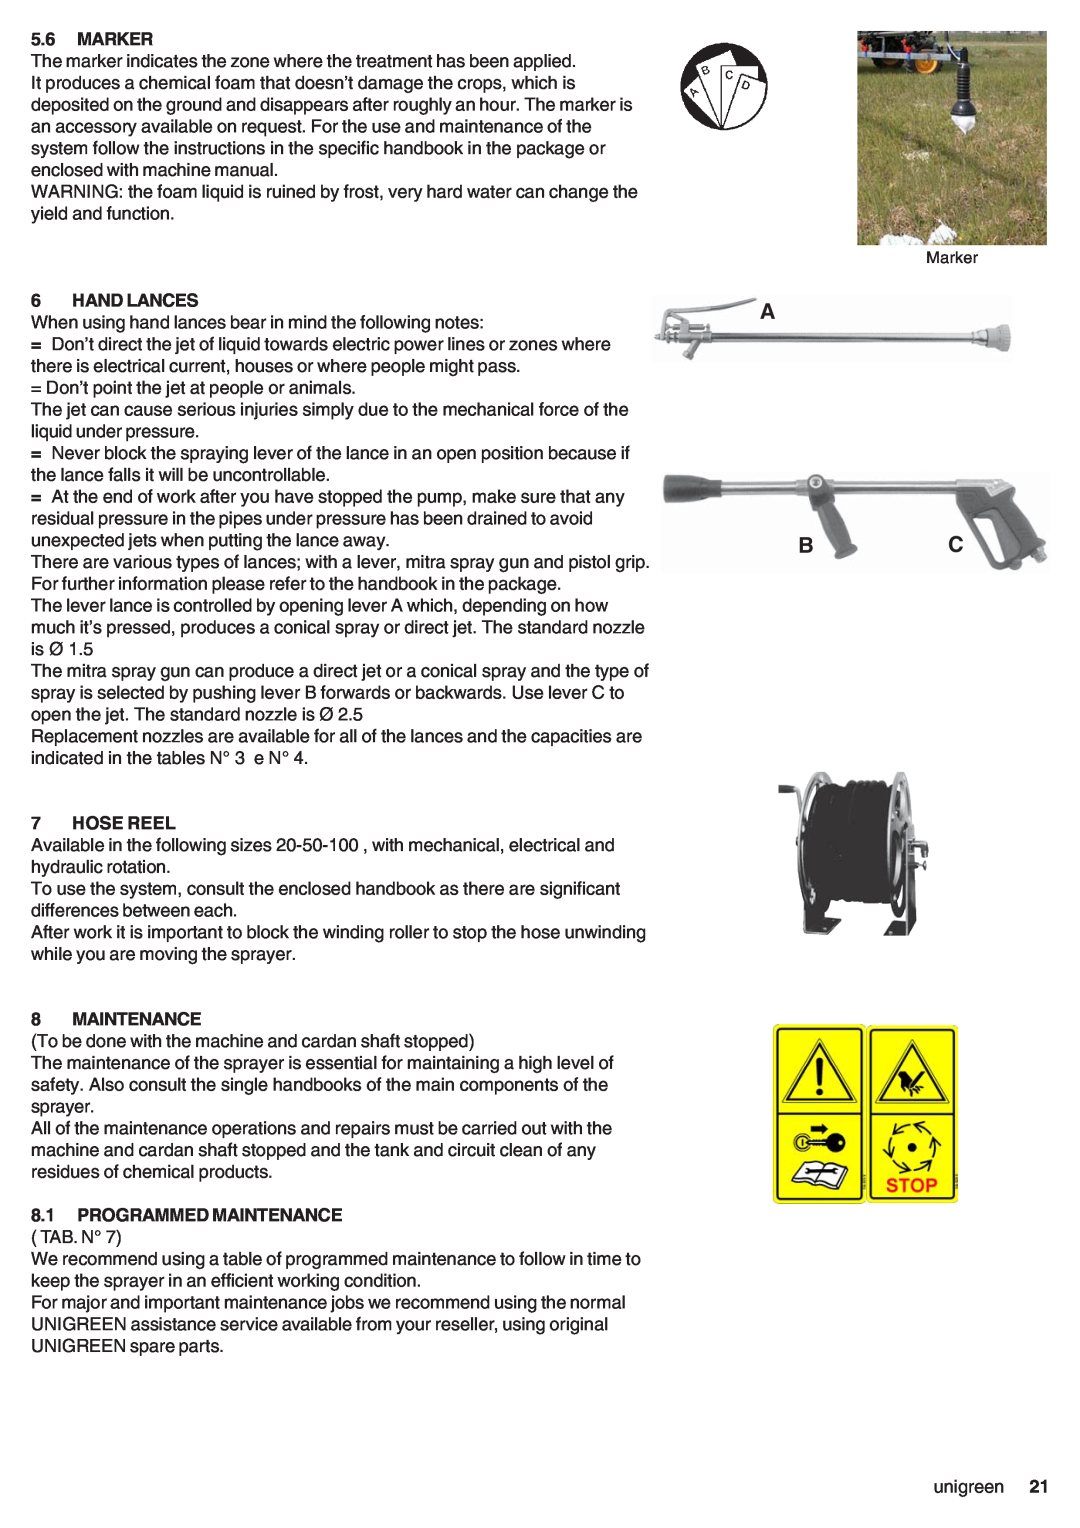 Unigreen CAMPO 11 - 16 - 22 - 32 manual A Bc, Marker, Hand Lances, Hose Reel, Programmed Maintenance Tab. N 